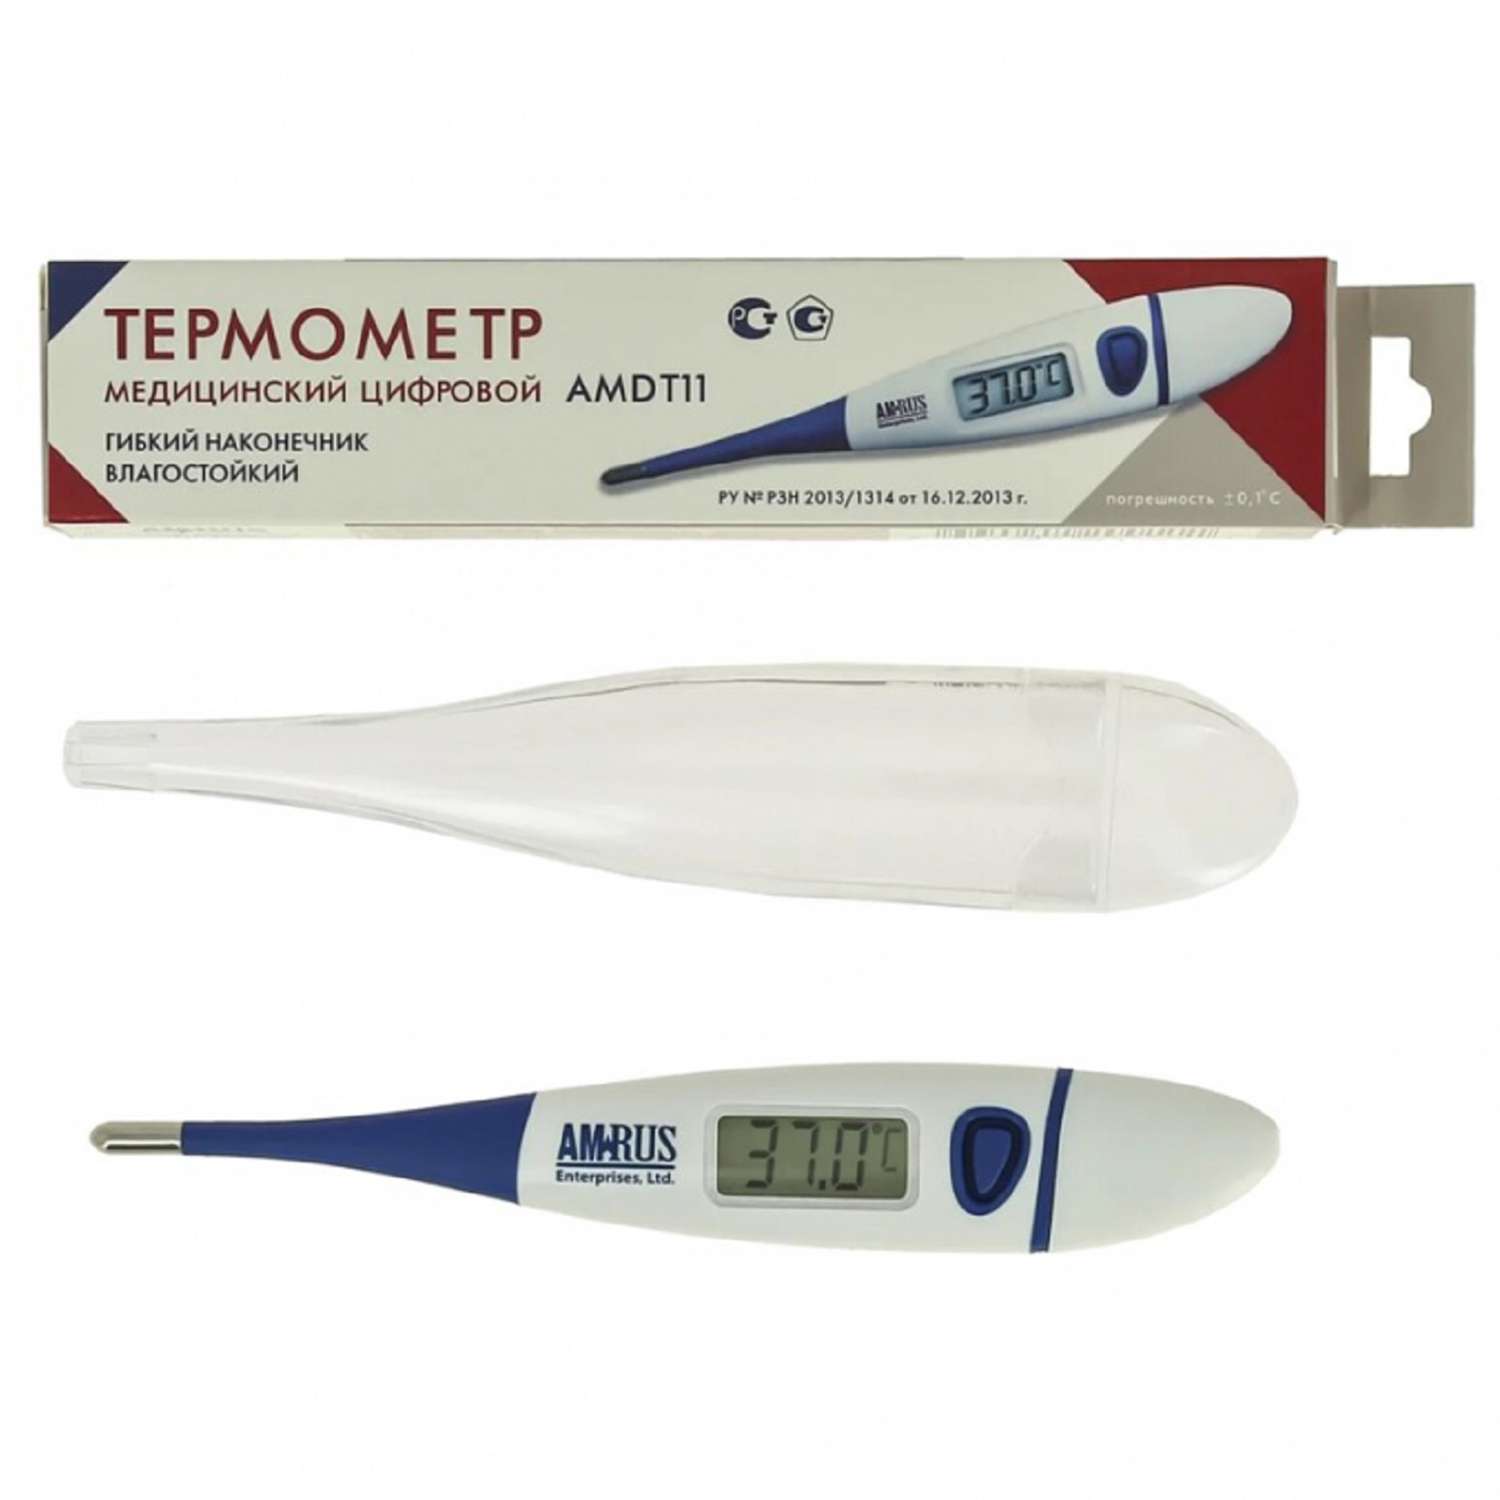 Термометр АМРОС медицинский цифровой с гибким атравматическим наконечником AMDT-11 - фото 2